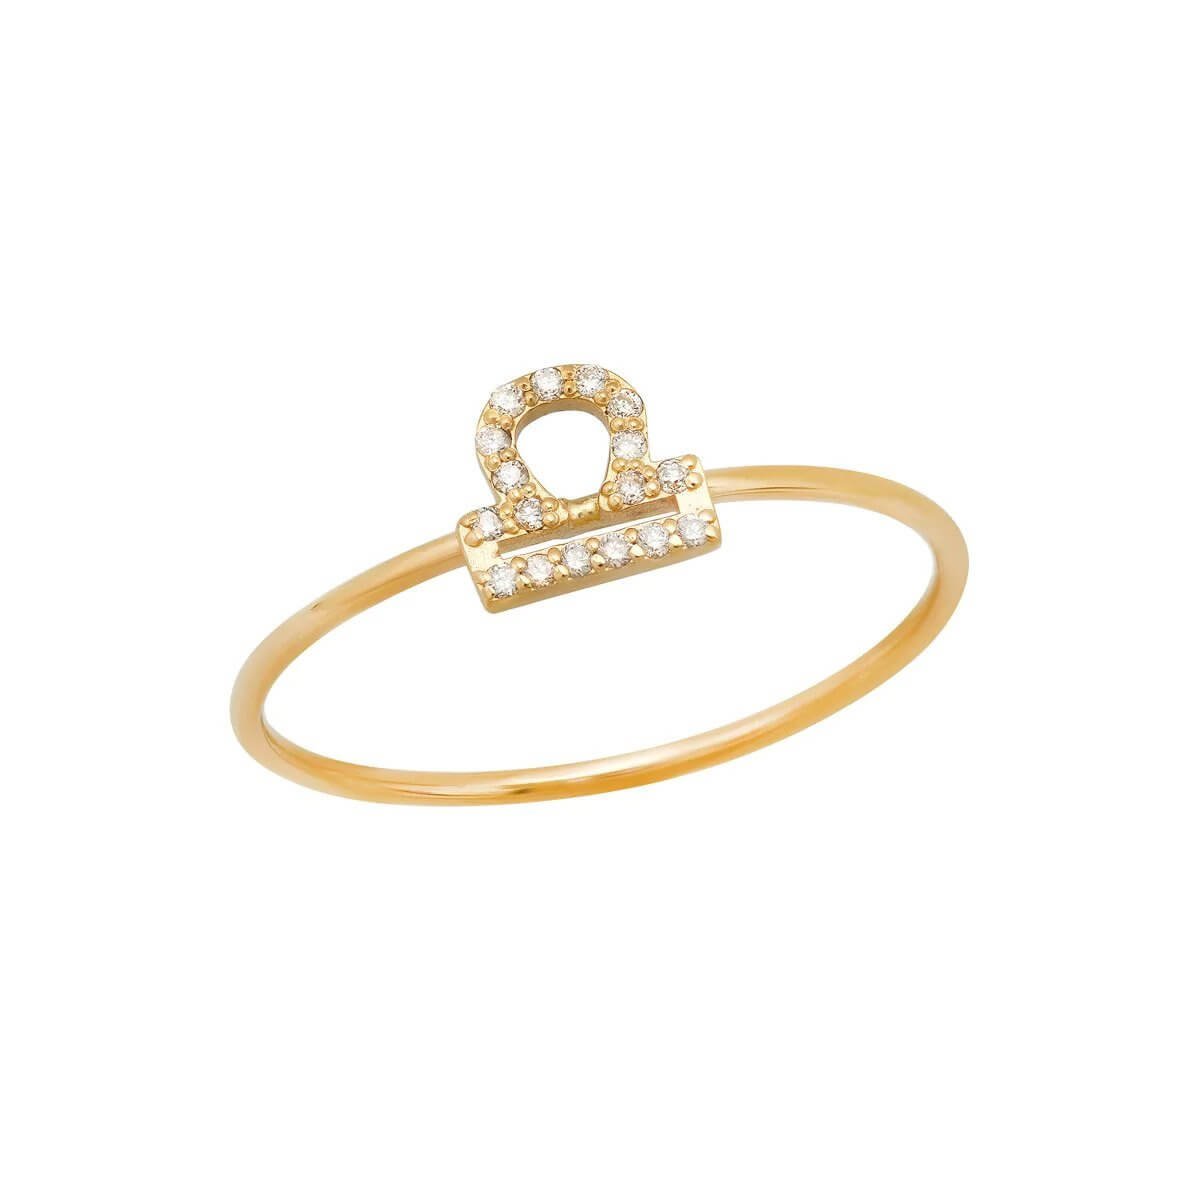 Bychari Diamond and Gold Libra Ring, $325